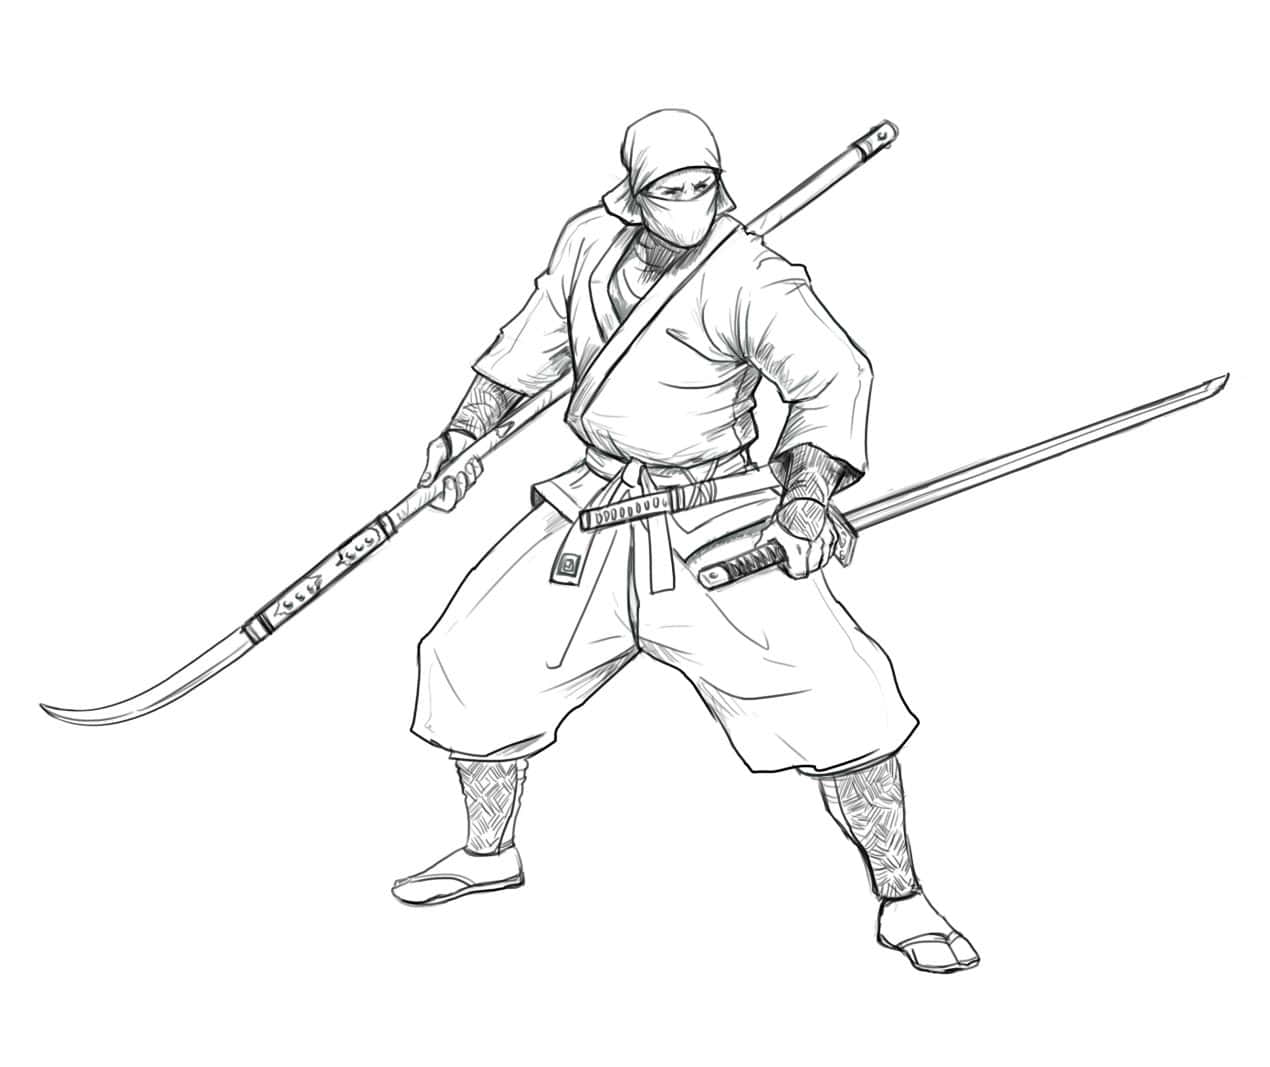 A Ninja Preparing for an Epic Battle